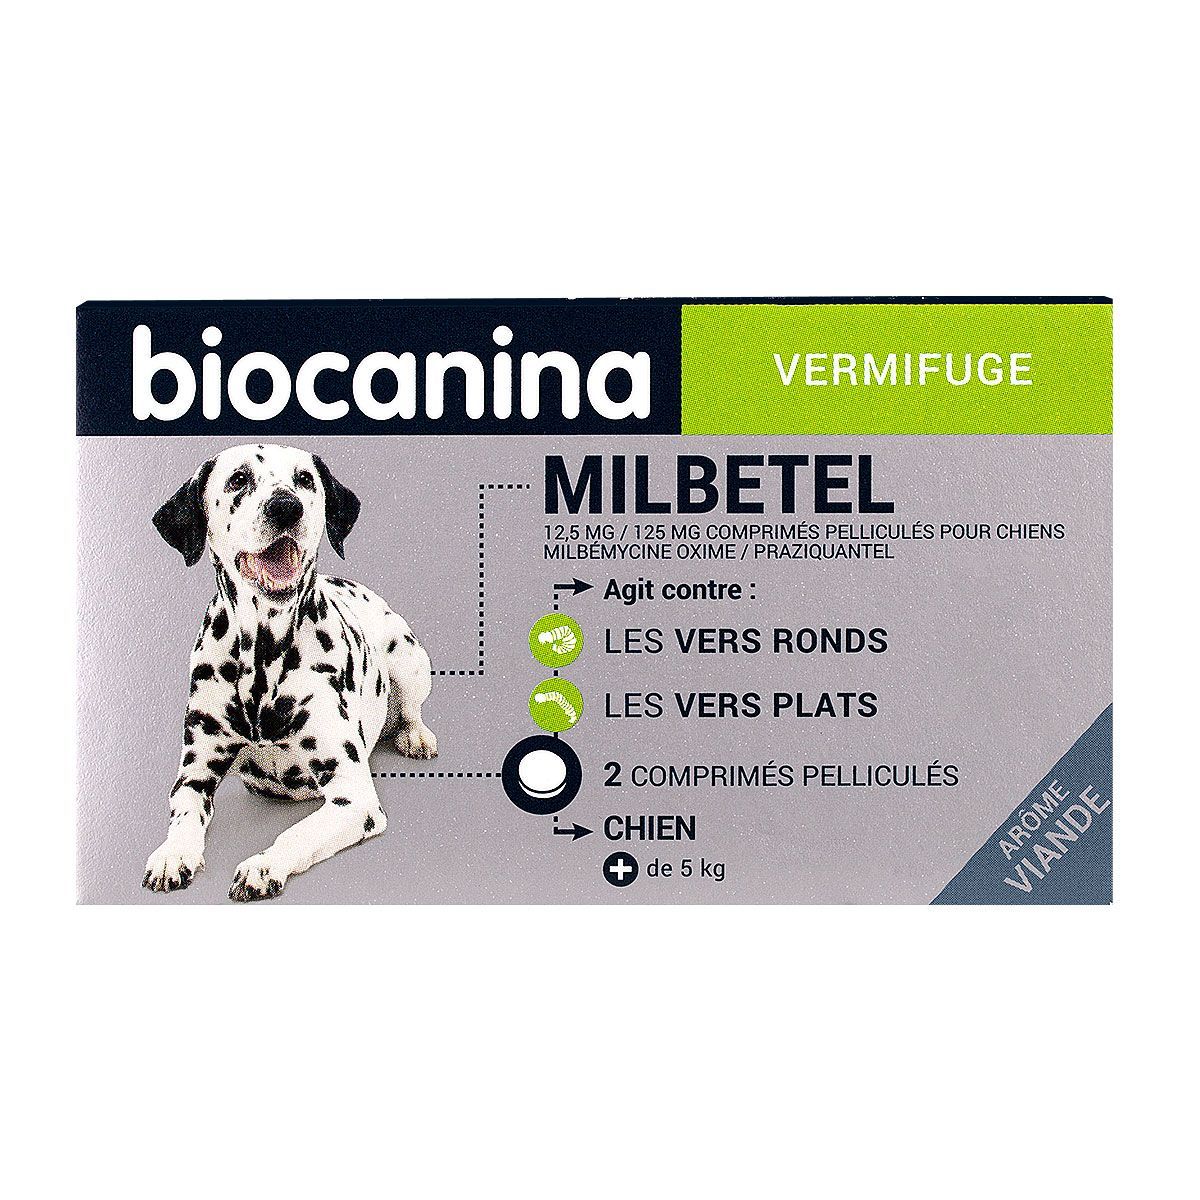 Biocanina Ascatryl Trio Vermifuge Chien 10 kg boite de 2 comprimés